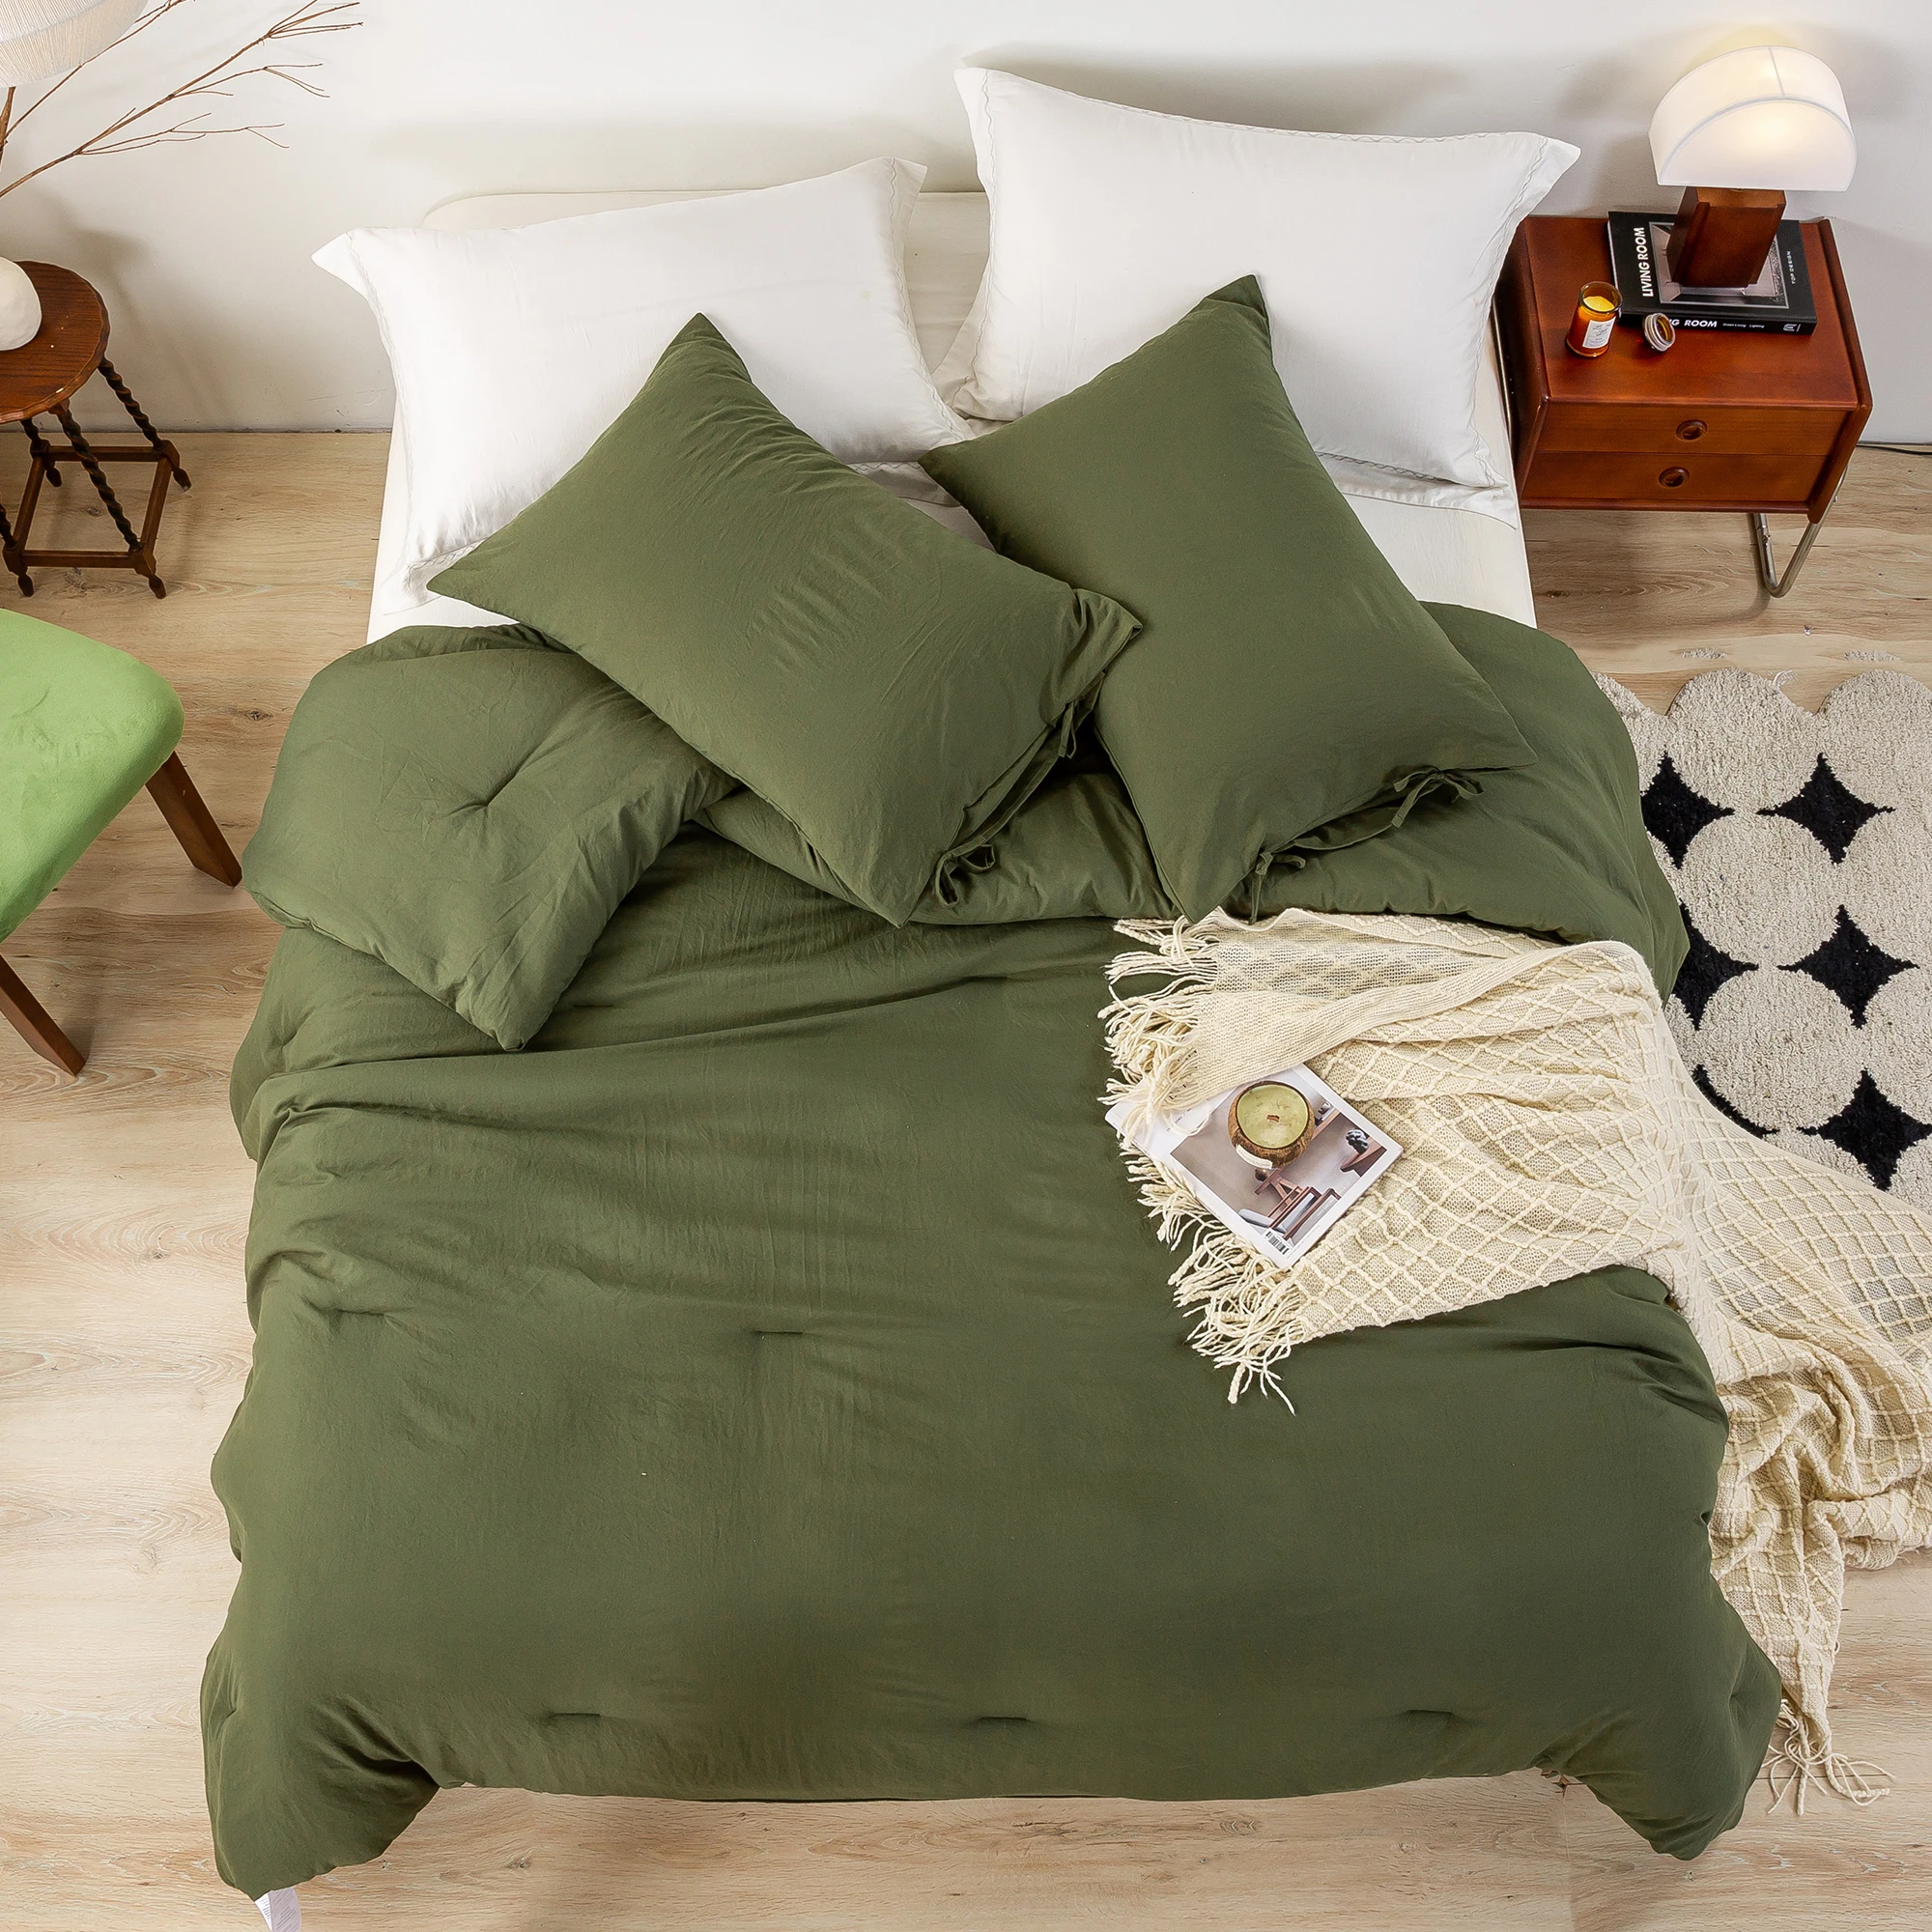 

Luxury Reversible Comforter Sets Queen Size Bed, Textured Chenille Cotton Stripe Bedding Down Comforter, Lightweight All Season,